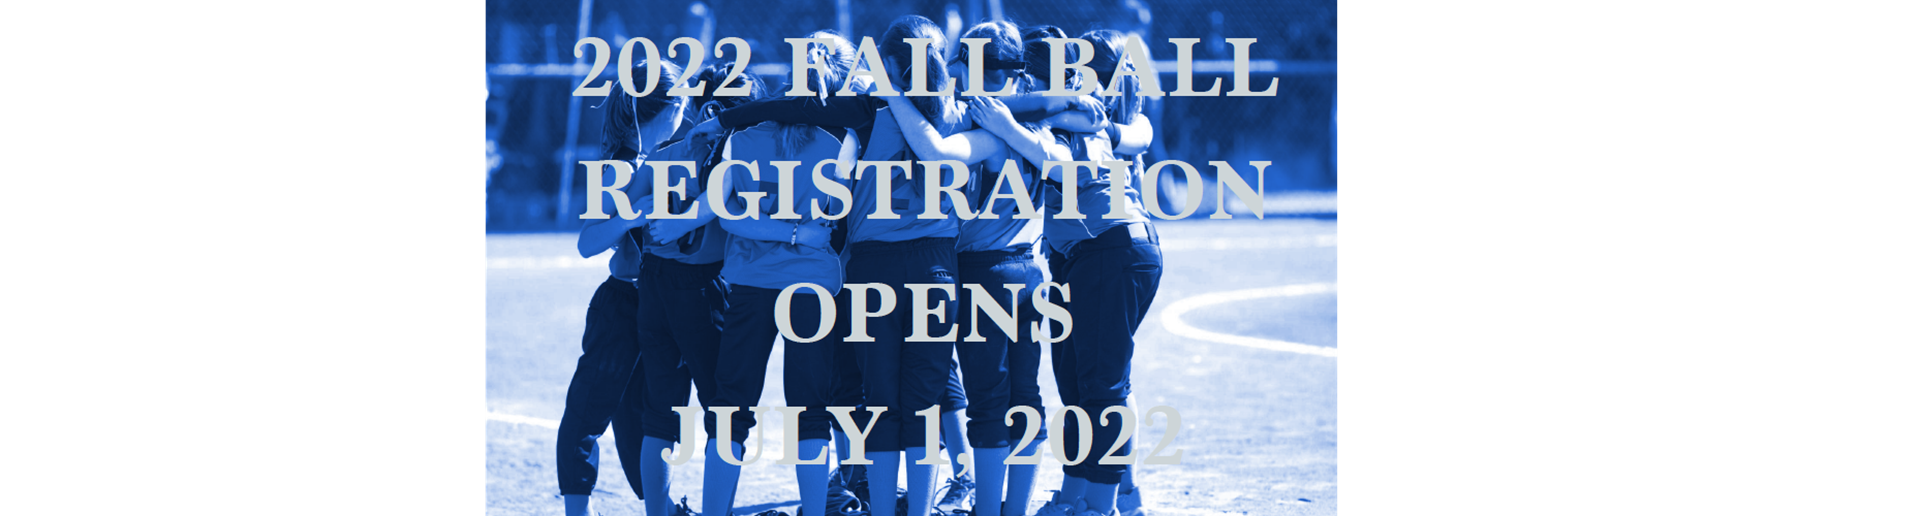 2022 Fall Ball Registration Opens July 1